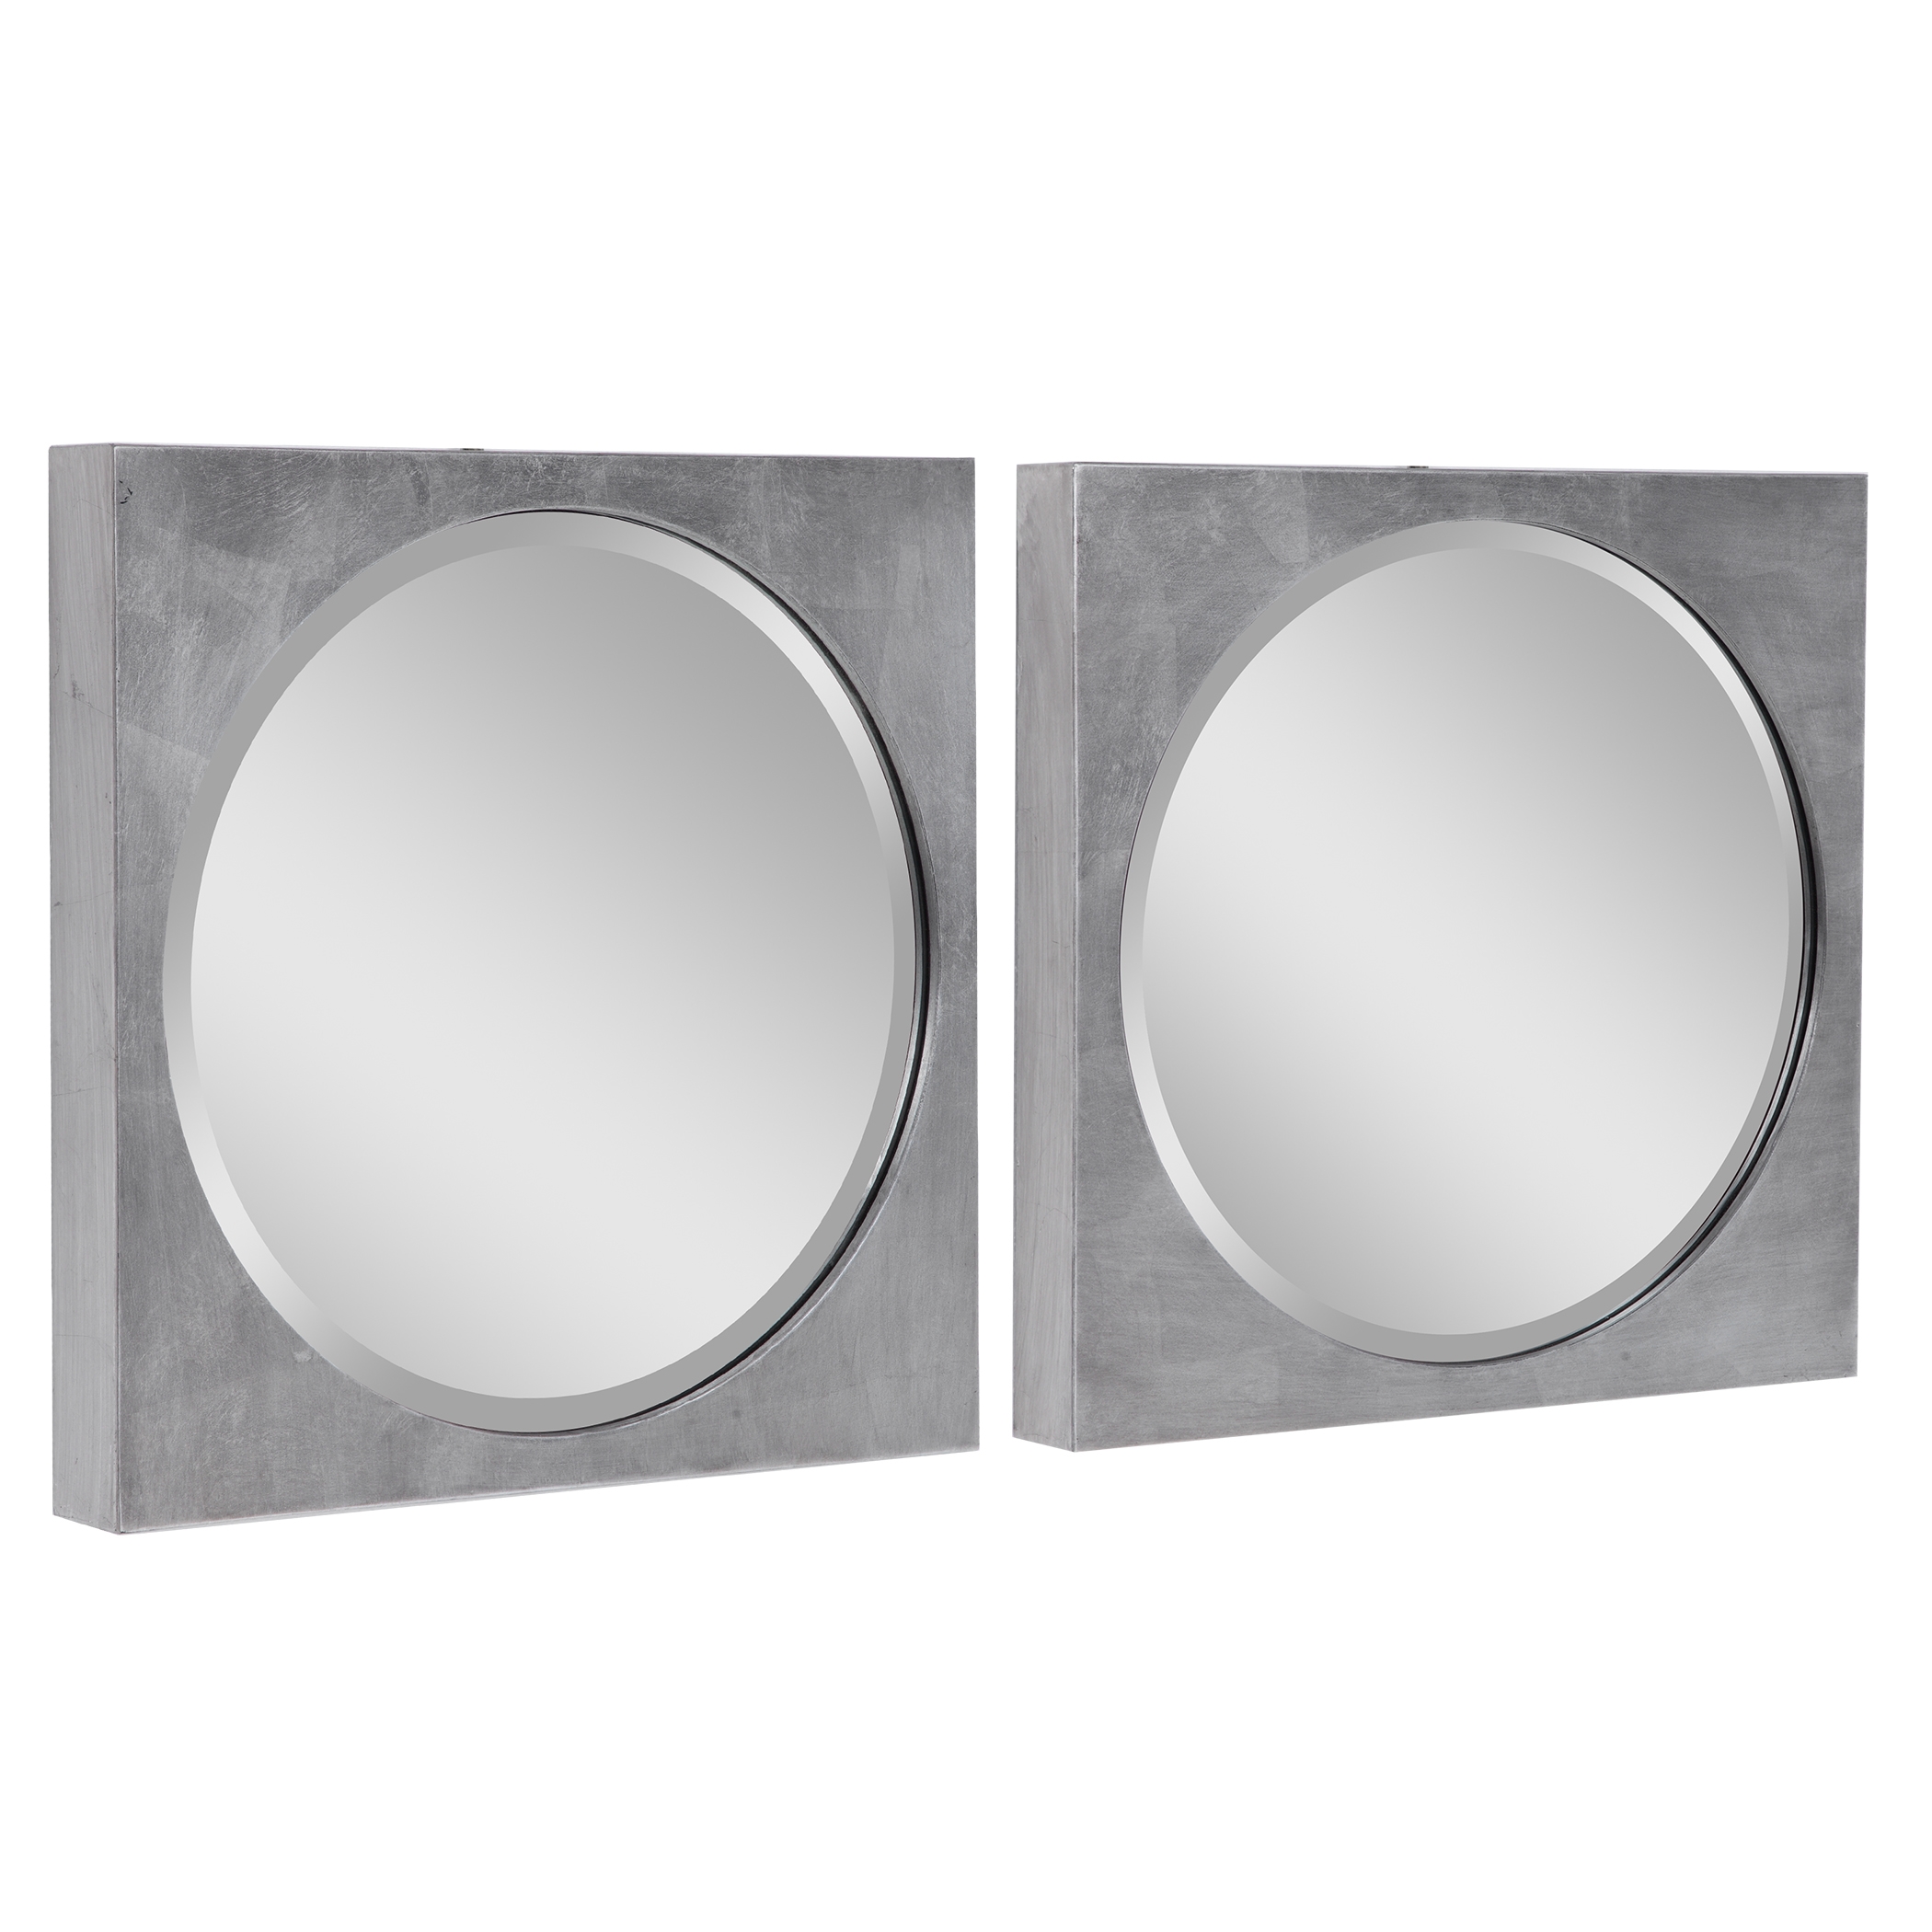 Aletris Modern Square Mirrors, S/2 - Image 2